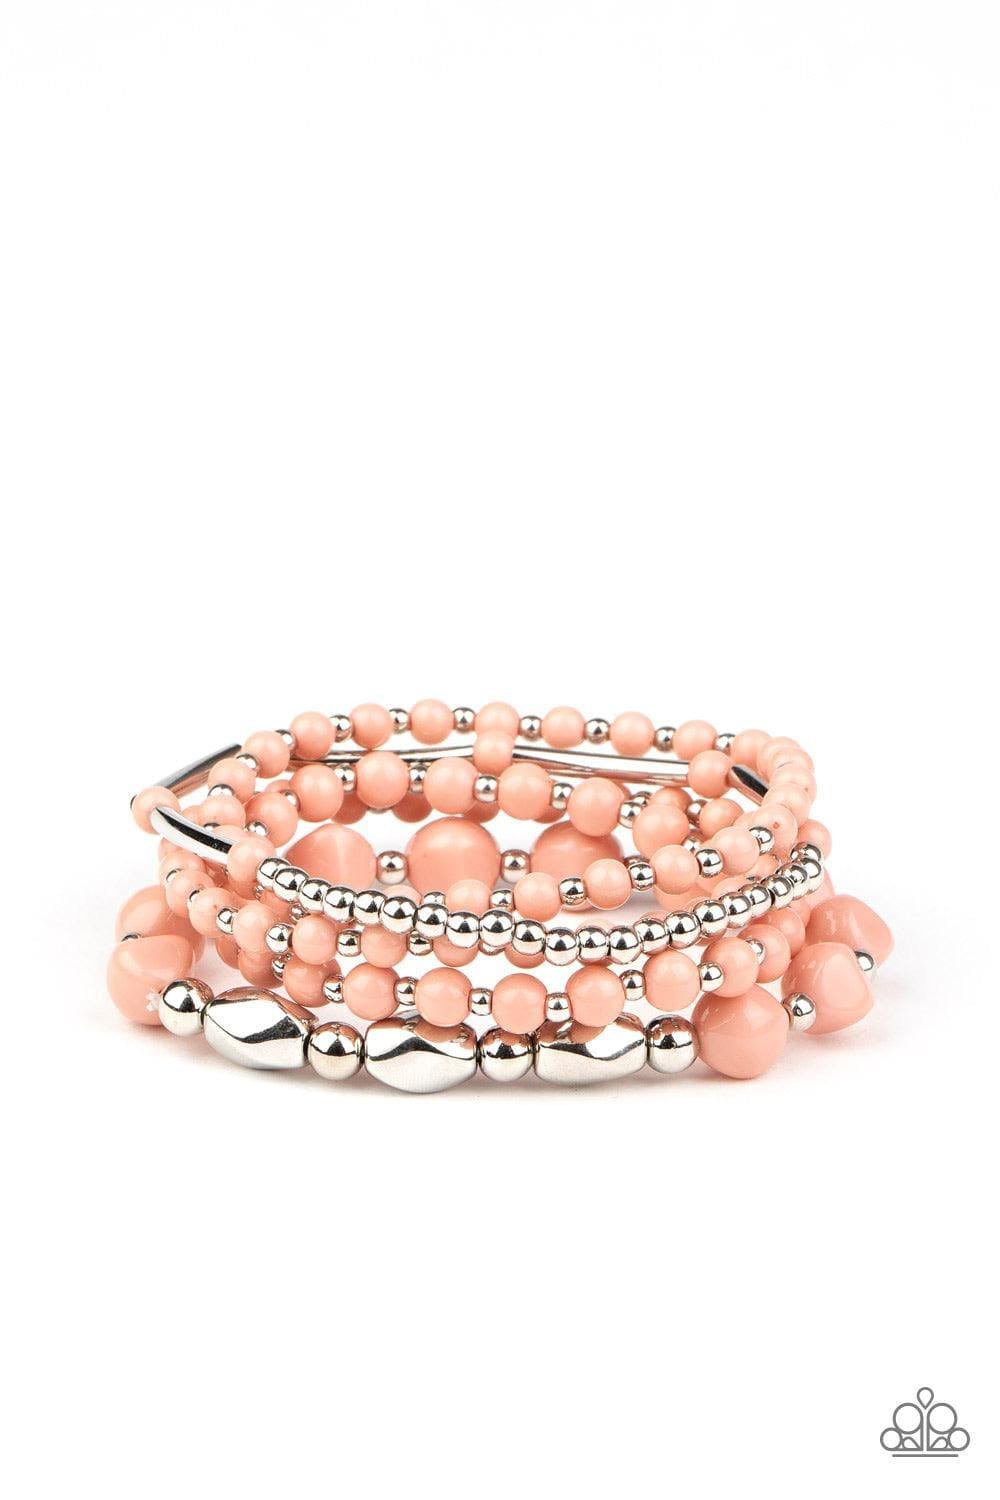 Paparazzi Accessories - Vibrantly Vintage - Pink Bracelet - Bling by JessieK